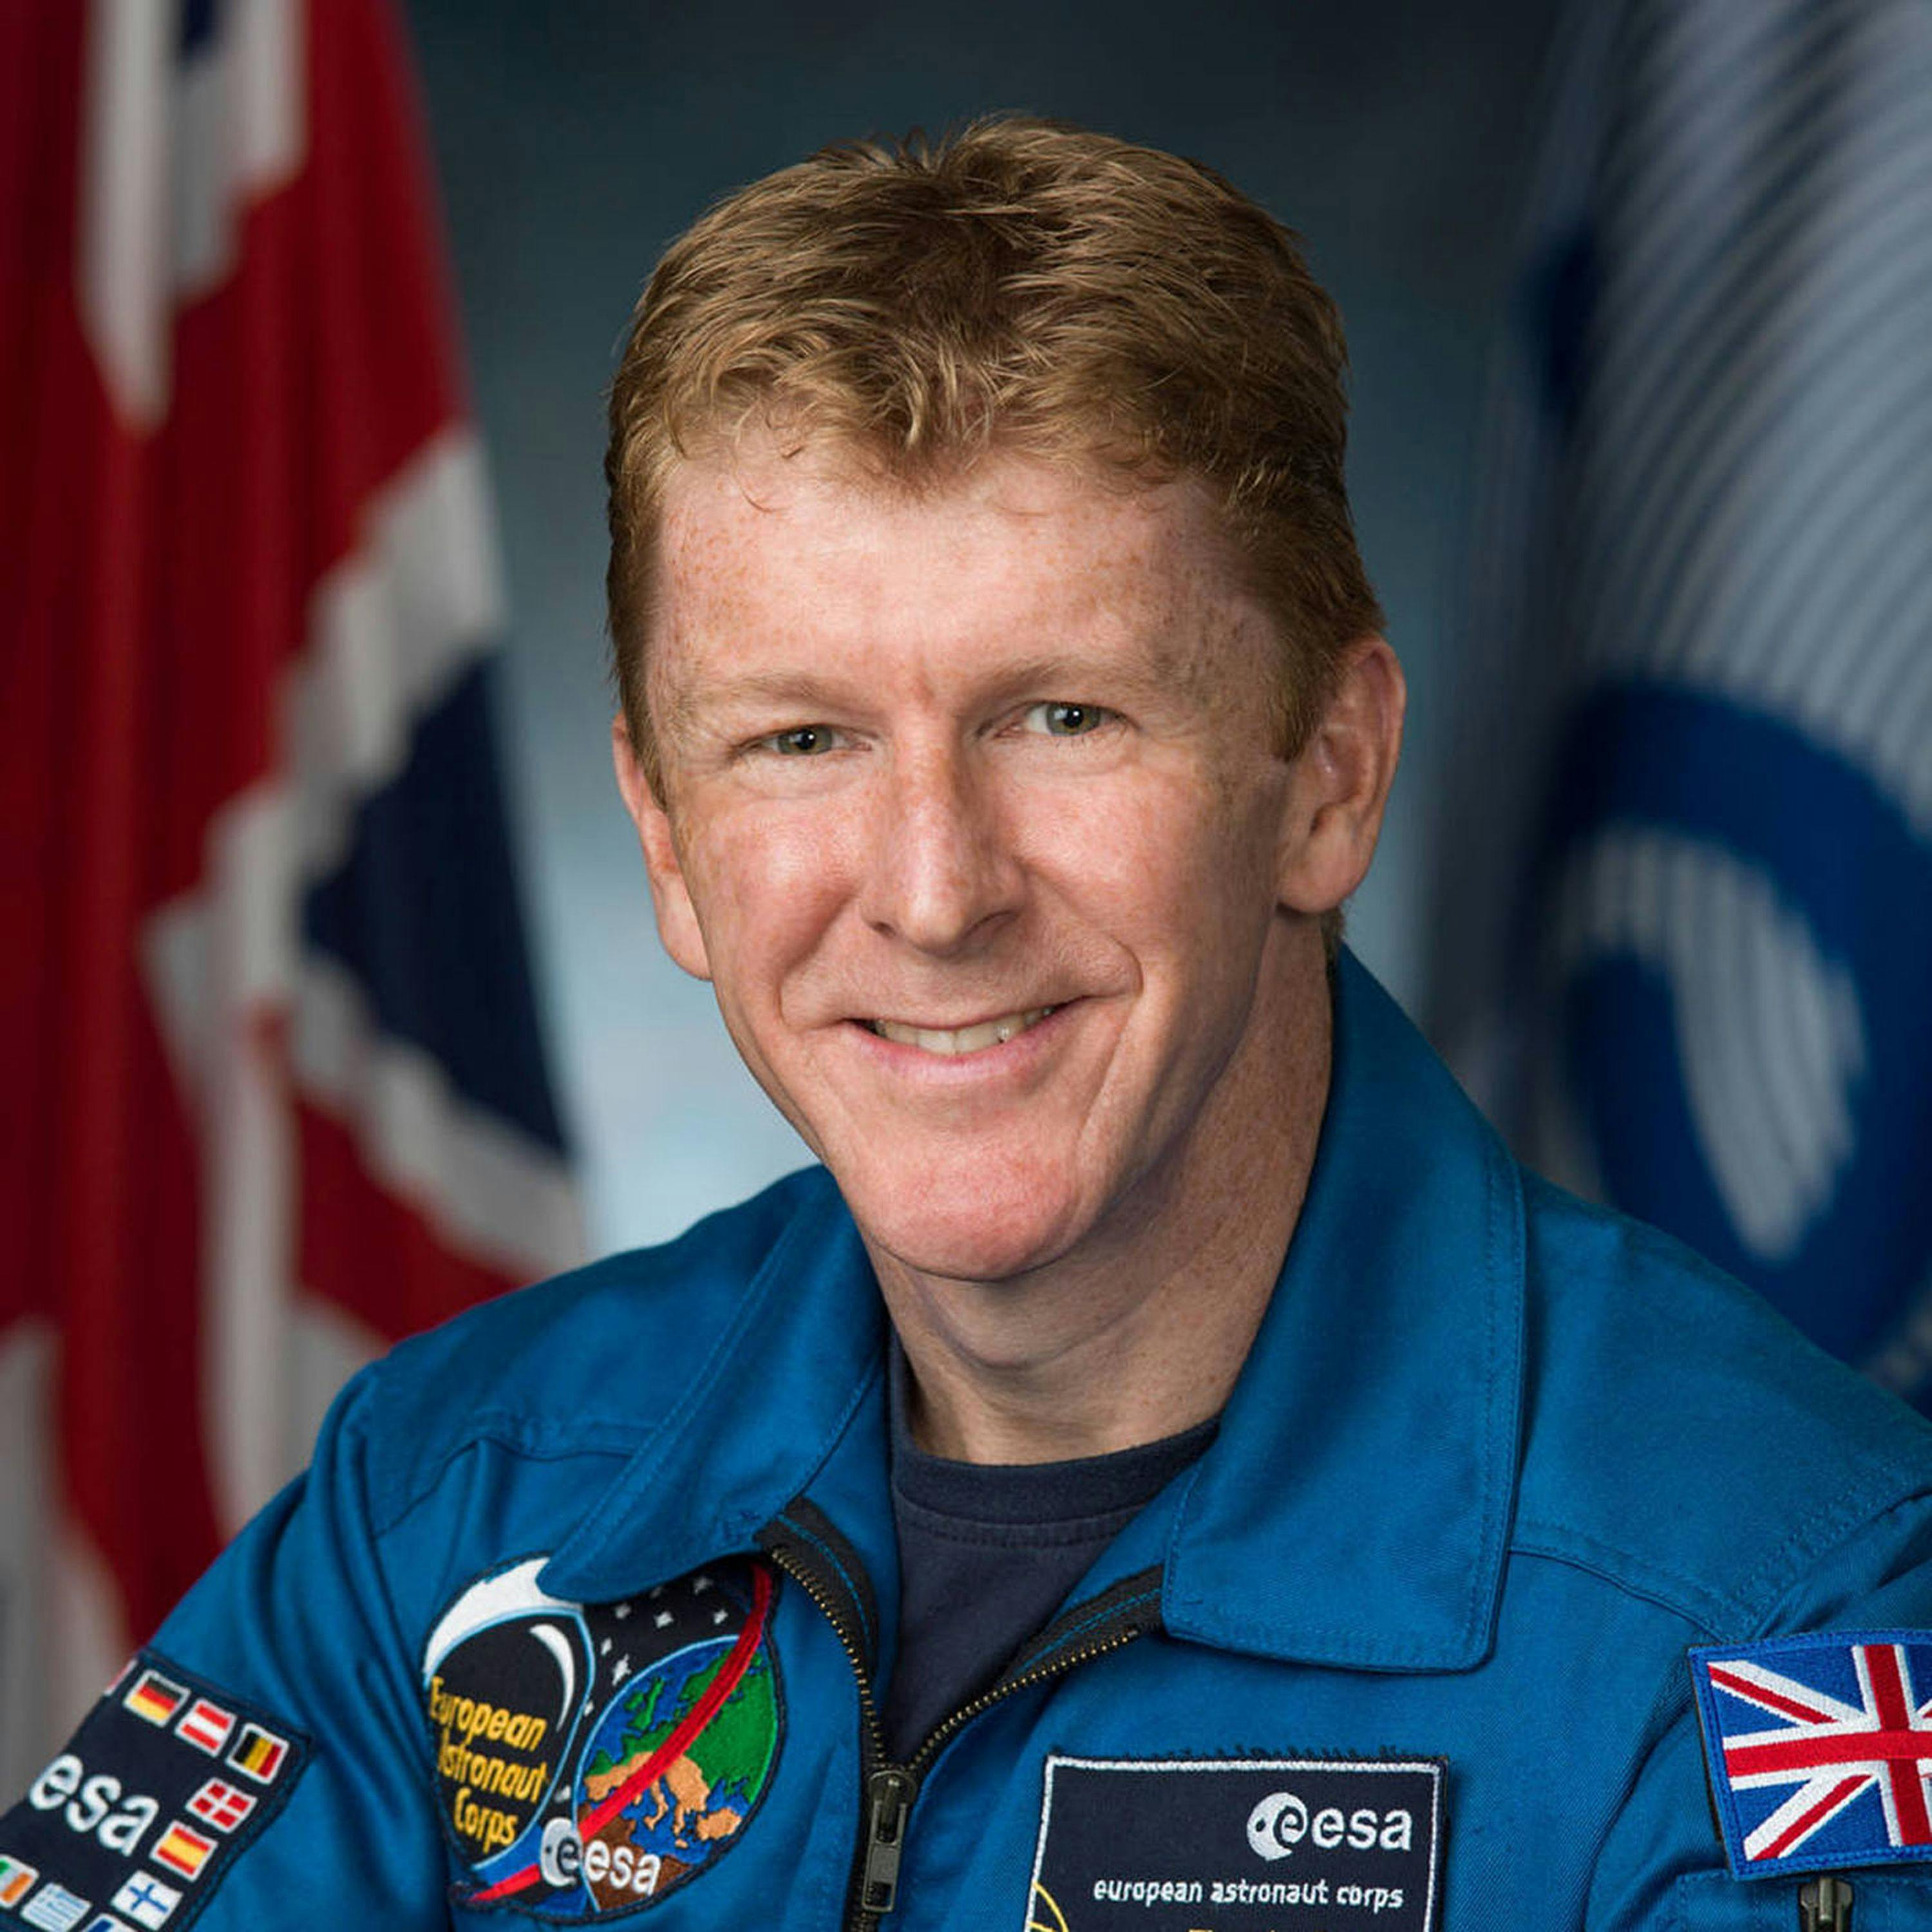 Interview: UK astronaut Tim Peake